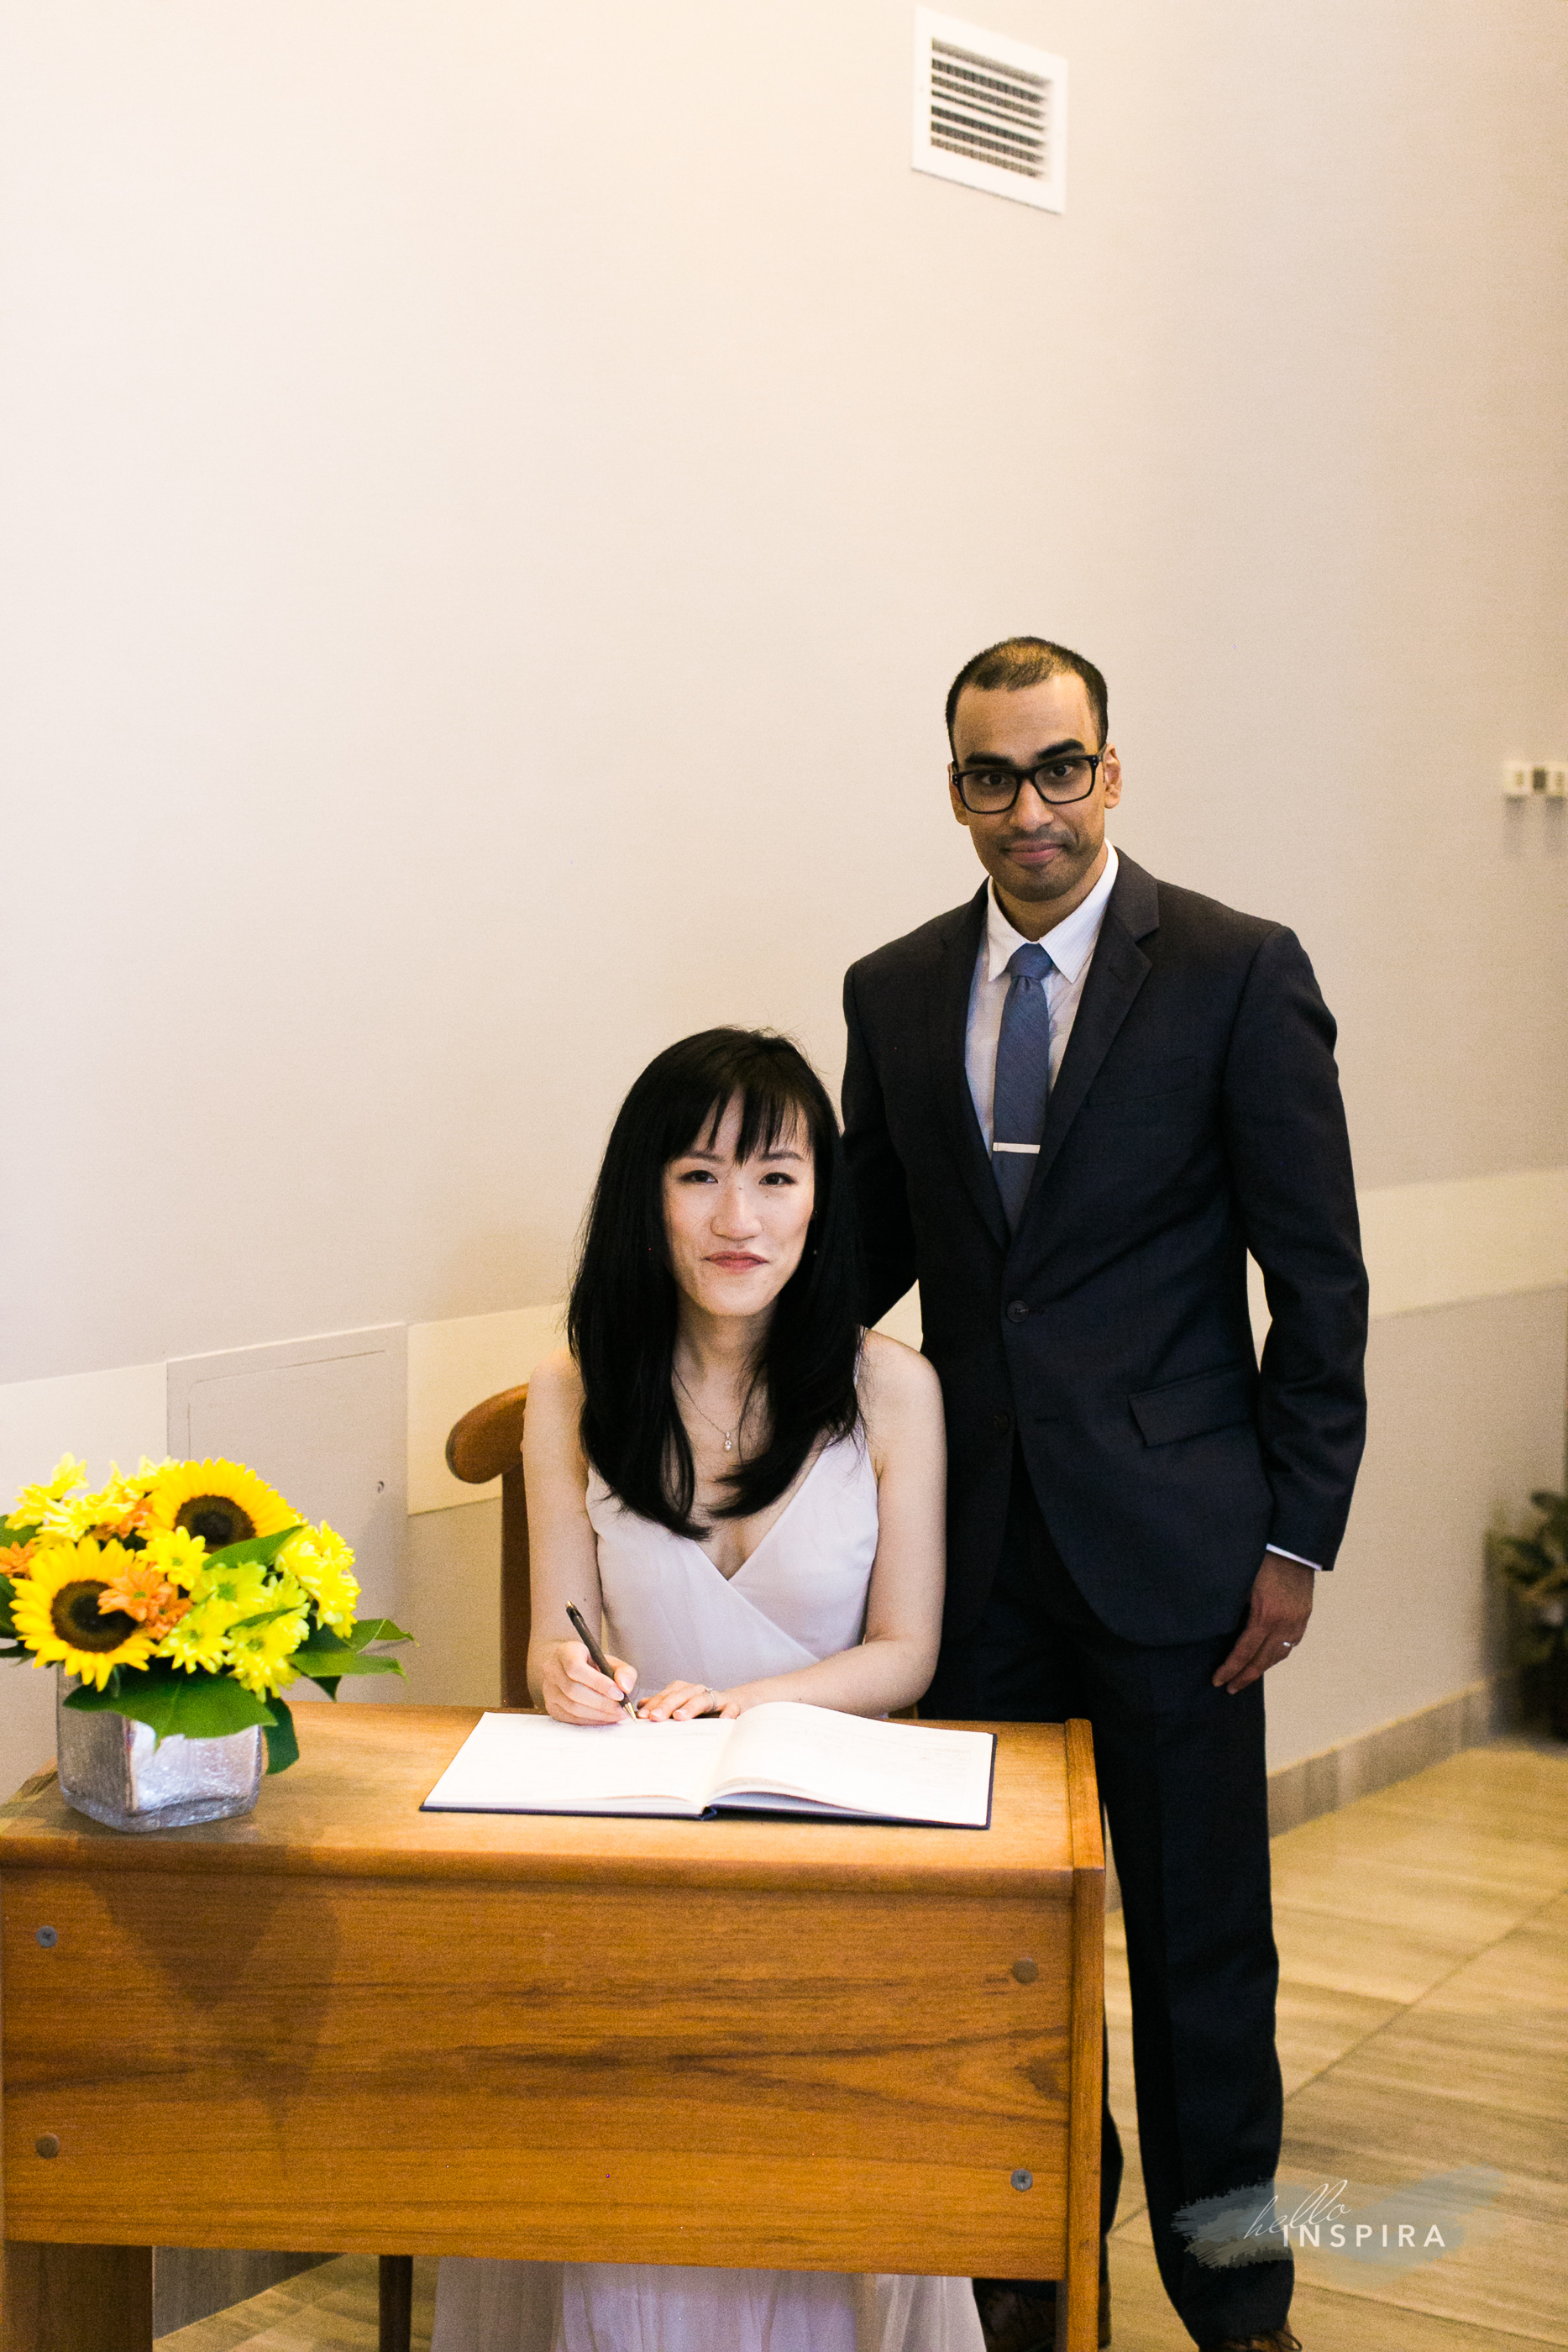 toronto city hall marriage signing